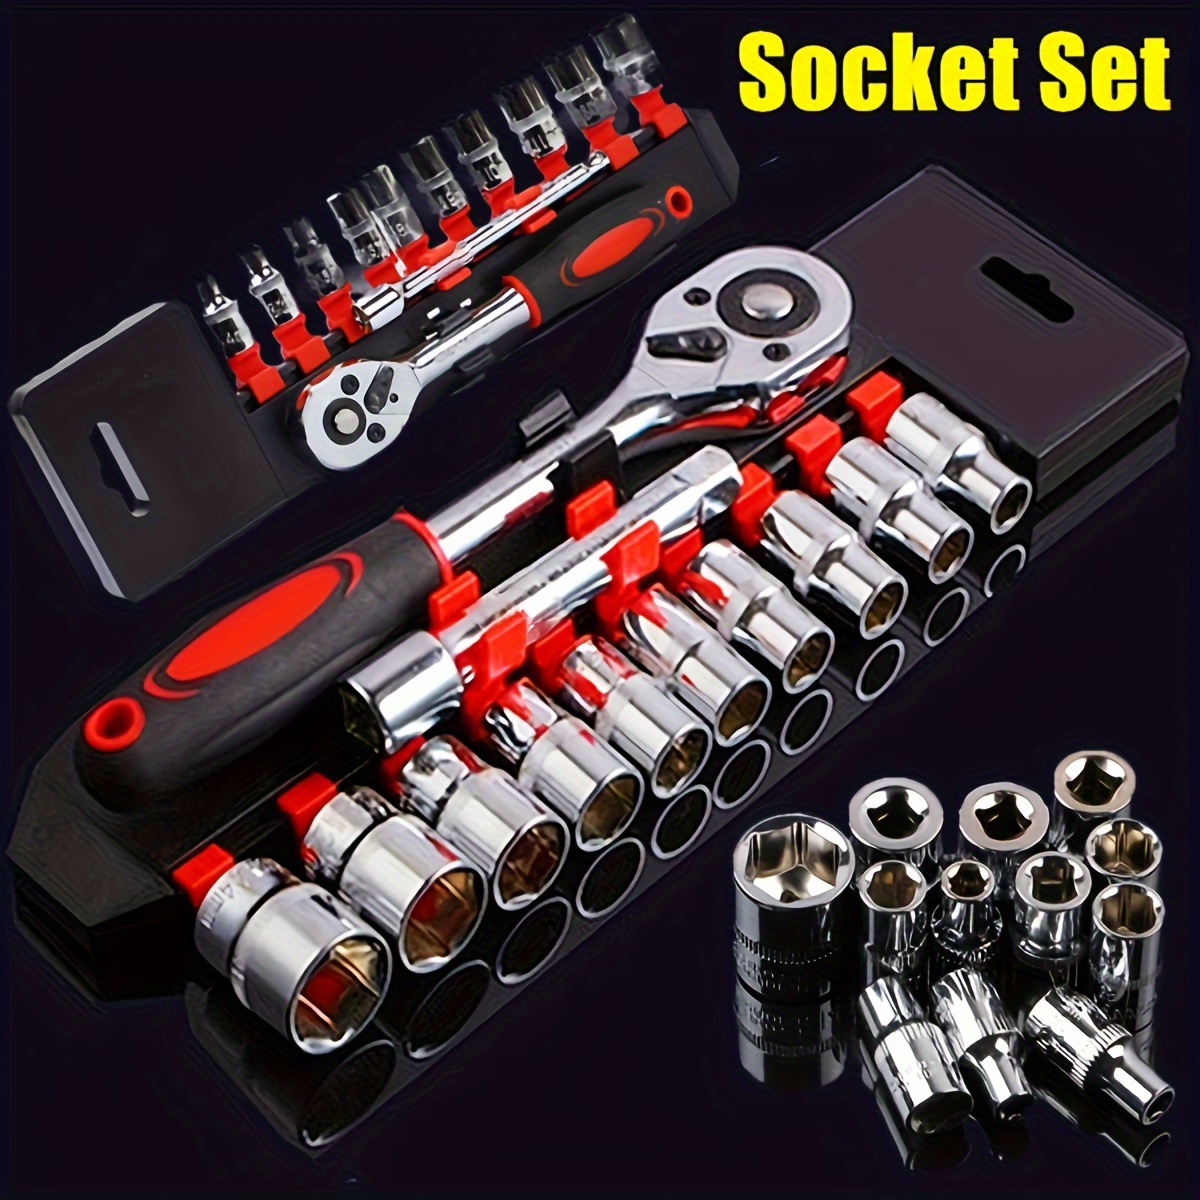 

12pcs Socket Set, 1/4 New Upgrade Wrench Socket Set Hardware Car Boat Motorcycle Bicycle Repairing Tool